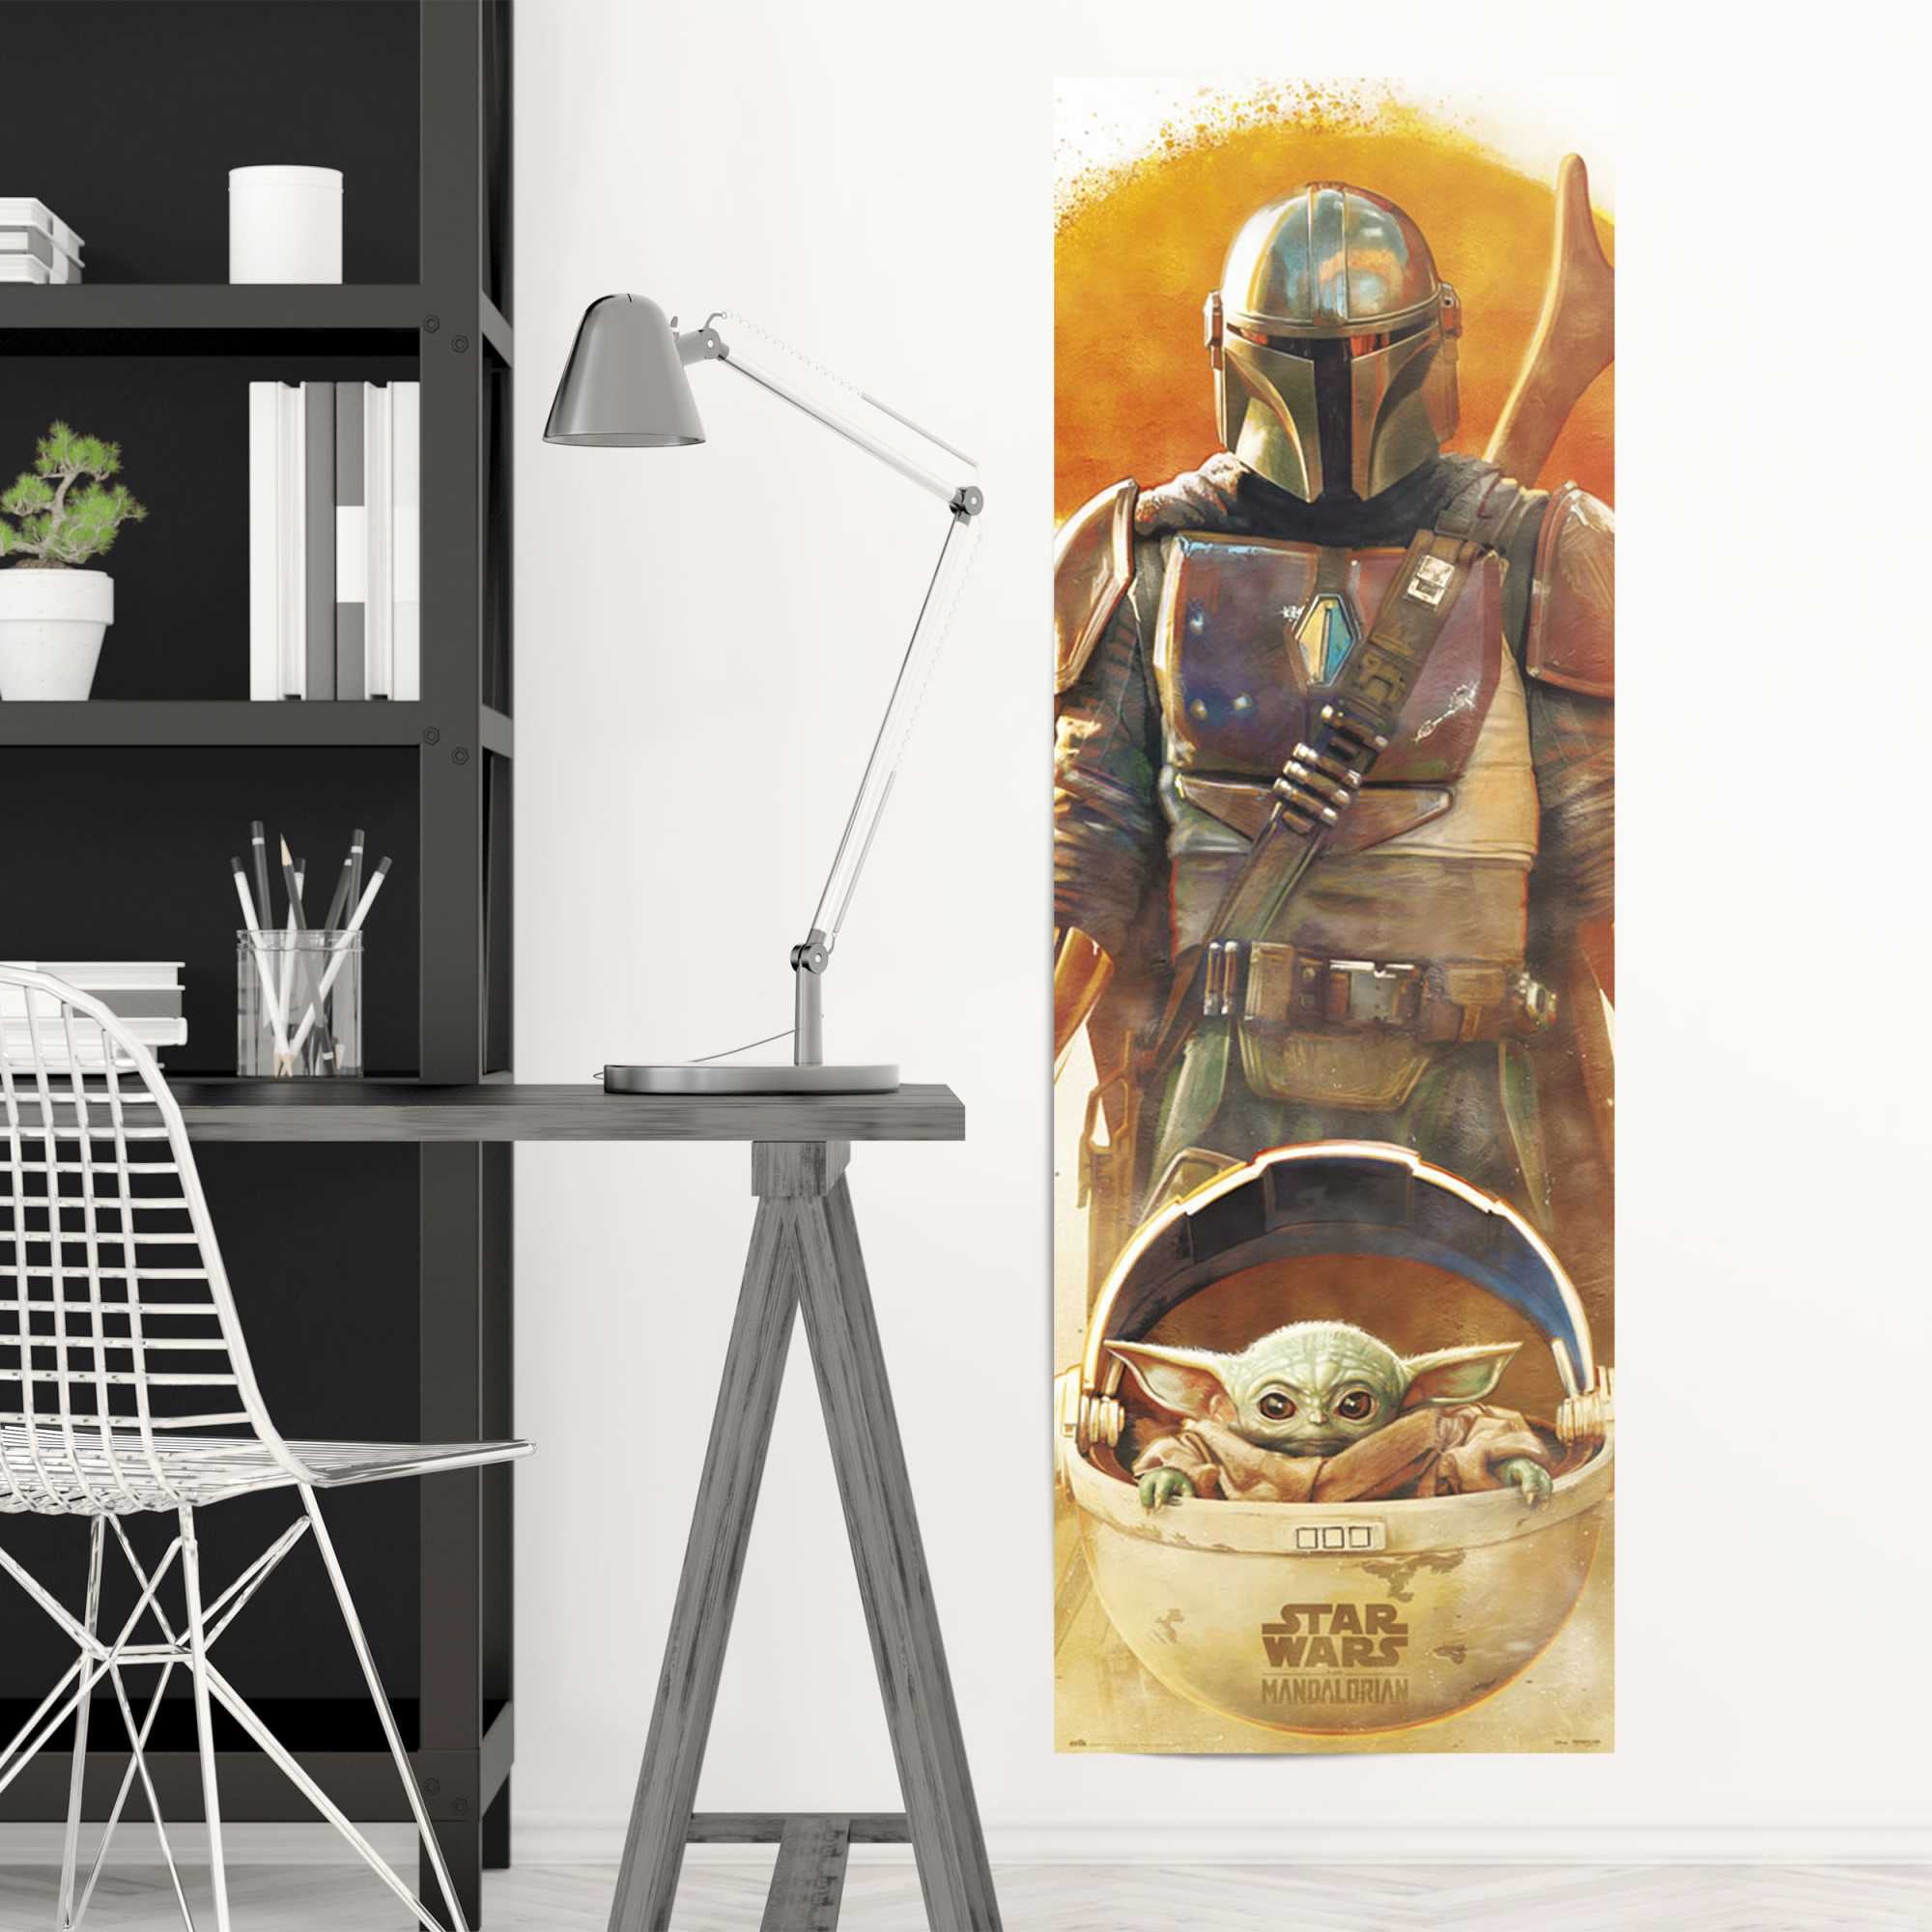 Reinders! Poster »Star Wars auf the Raten bestellen - mandalorioan«